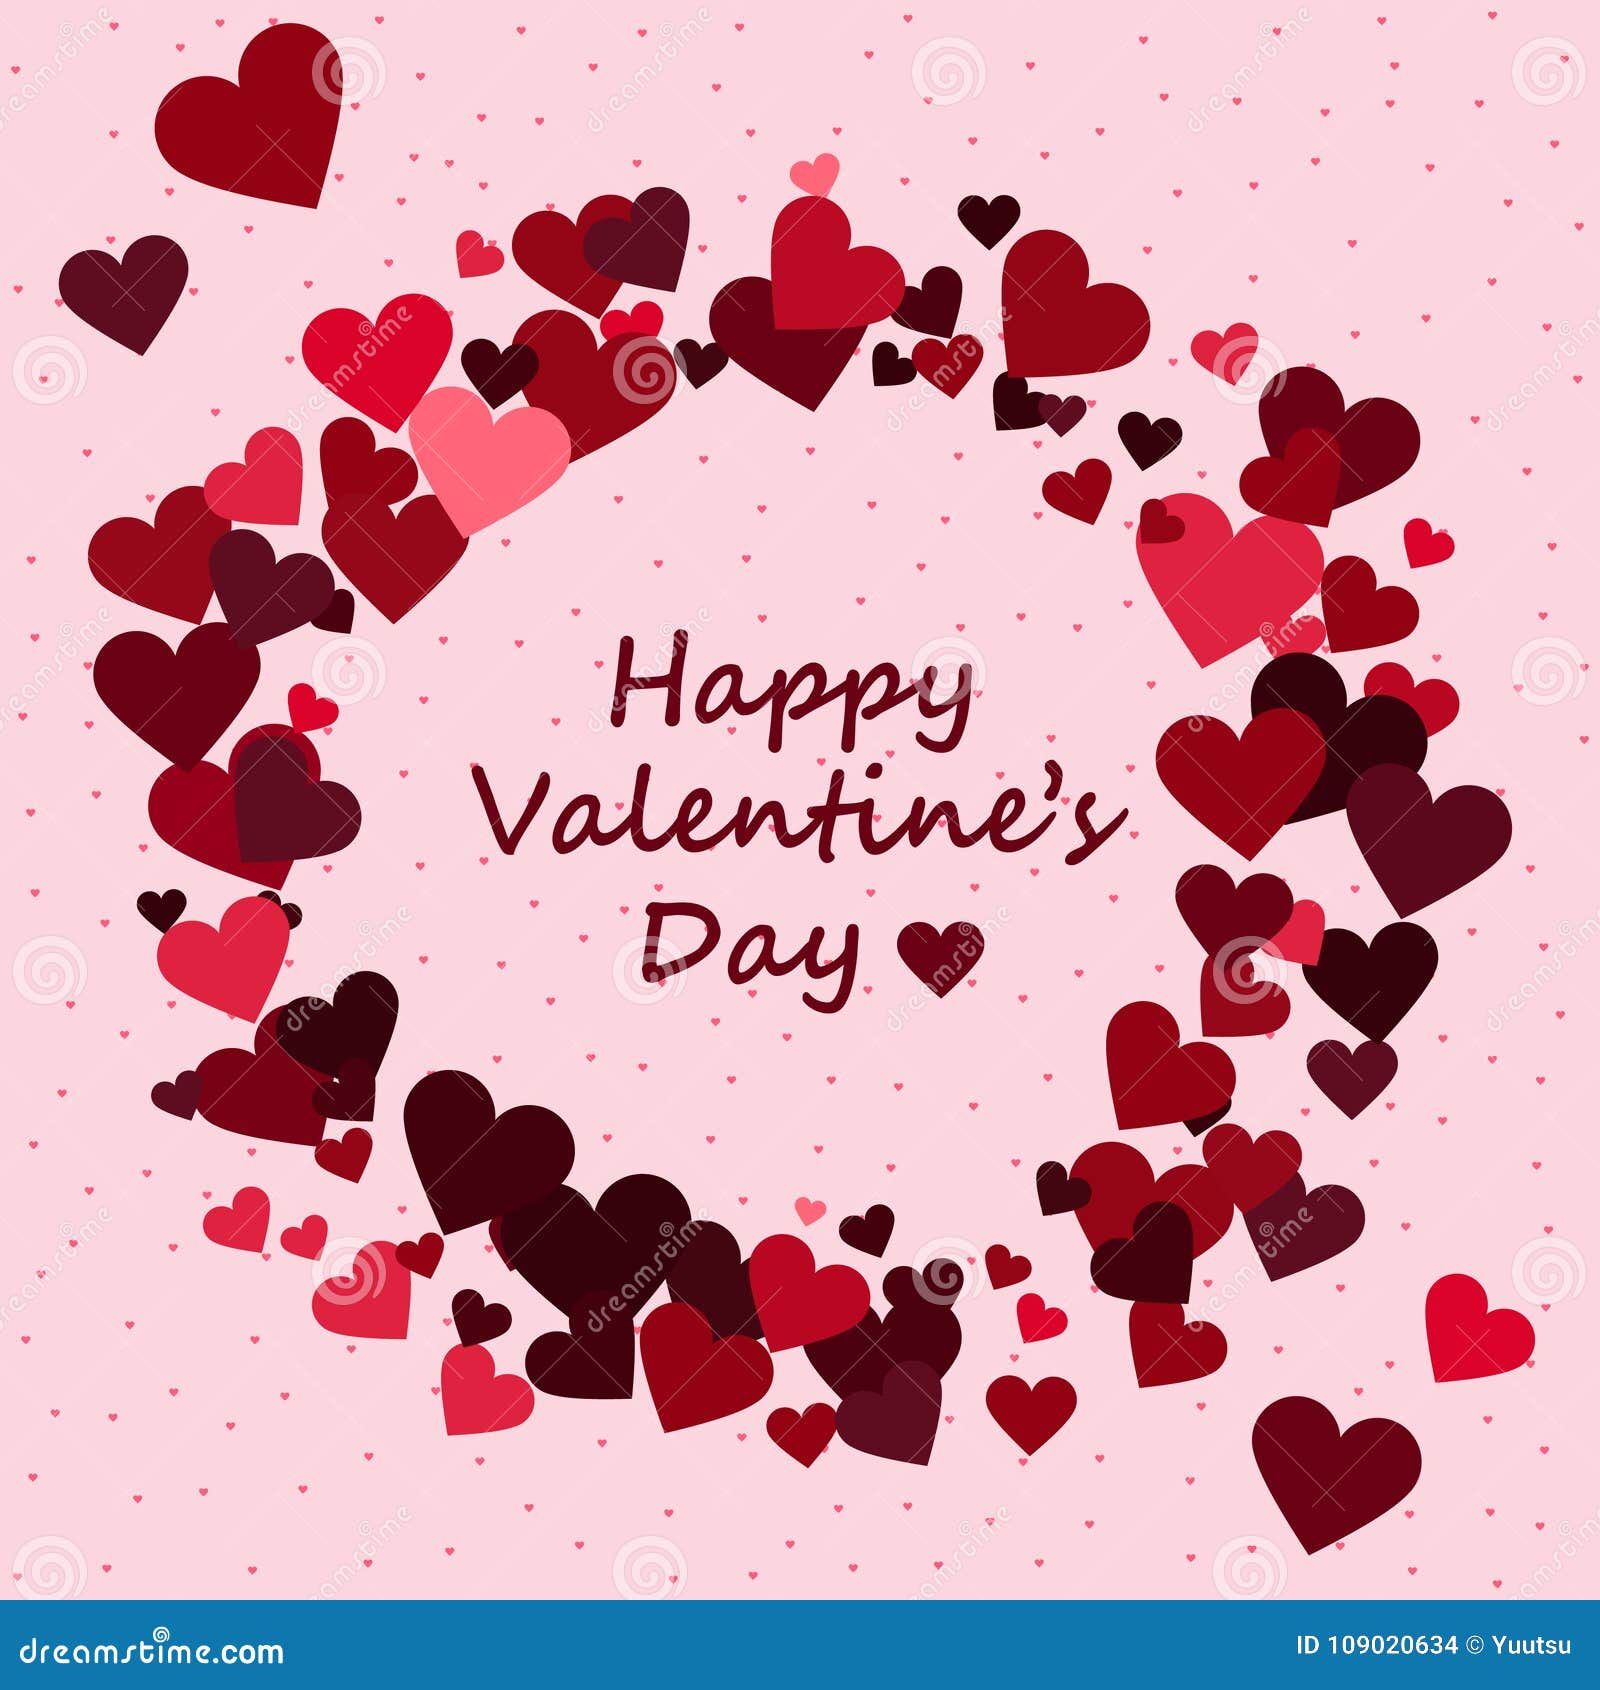 52 DIY Valentine's Day Card Ideas - Cute Homemade Valentine Cards